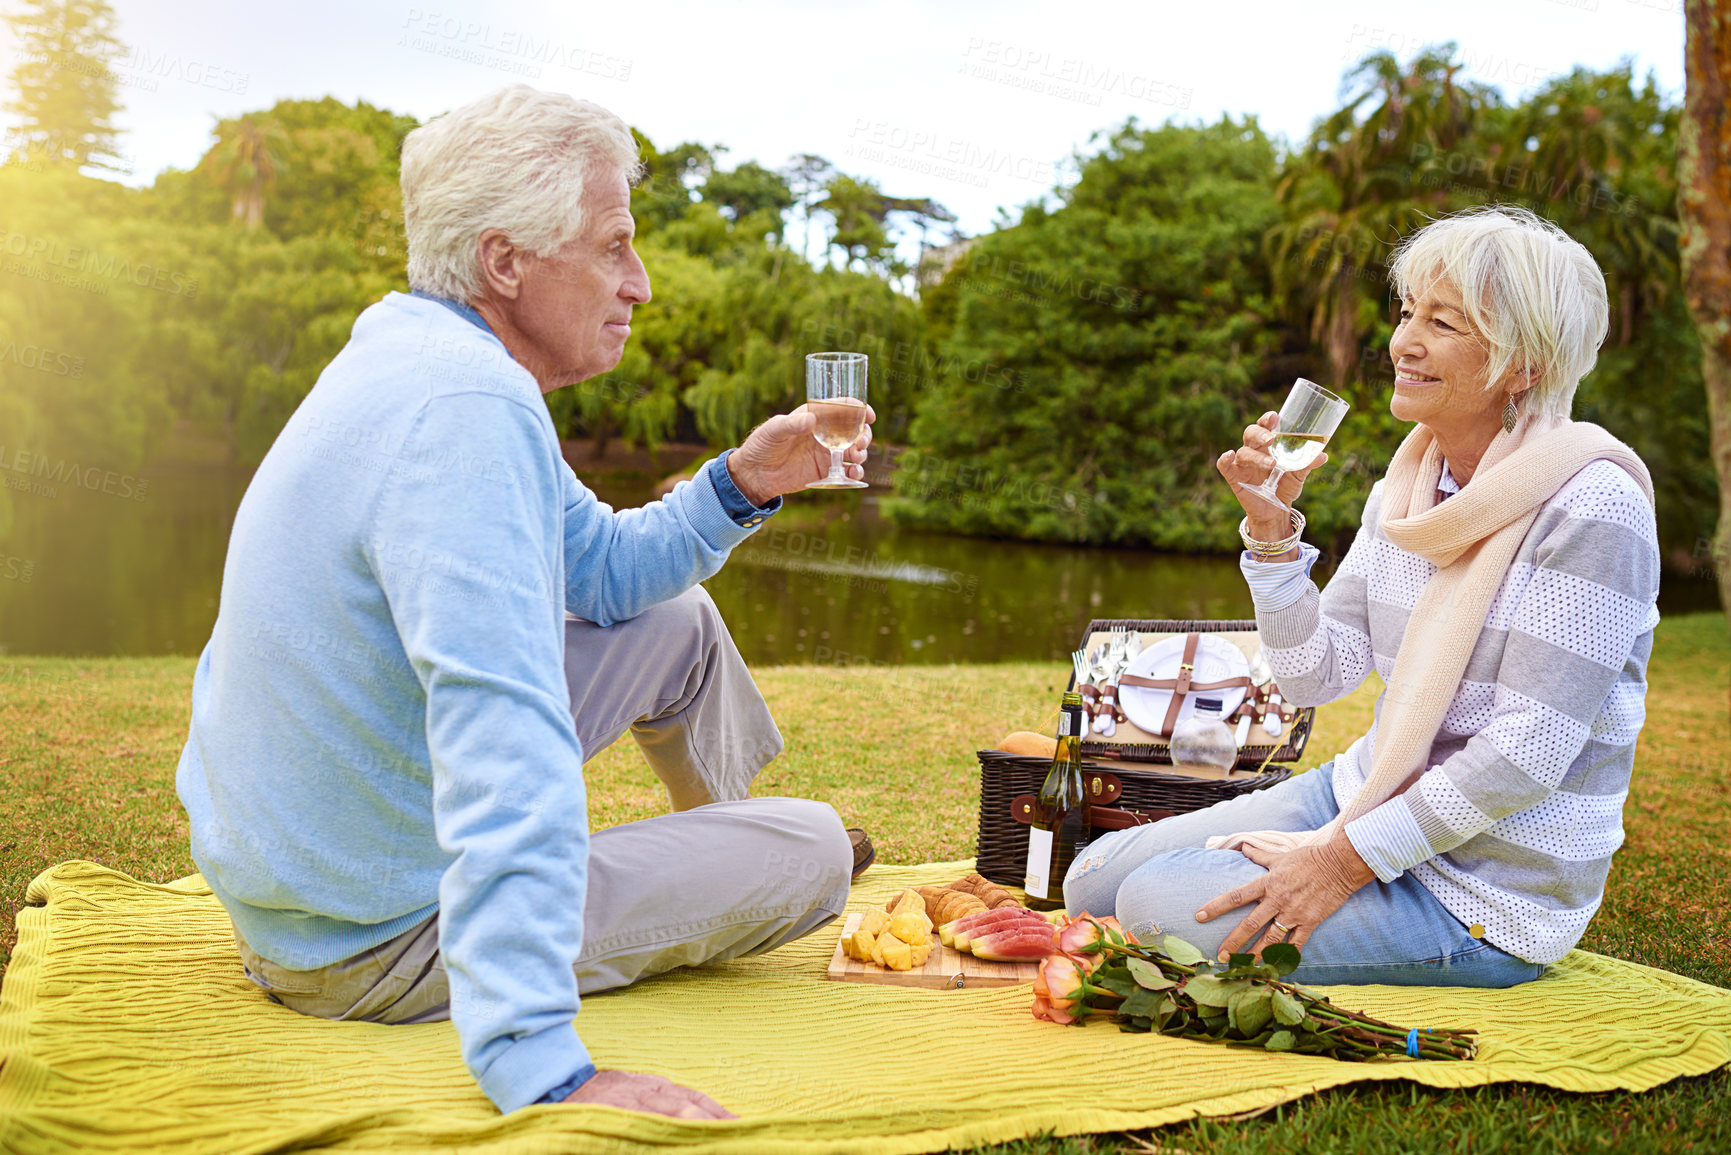 Buy stock photo Shot of a senior couple enjoying a picnic in a park